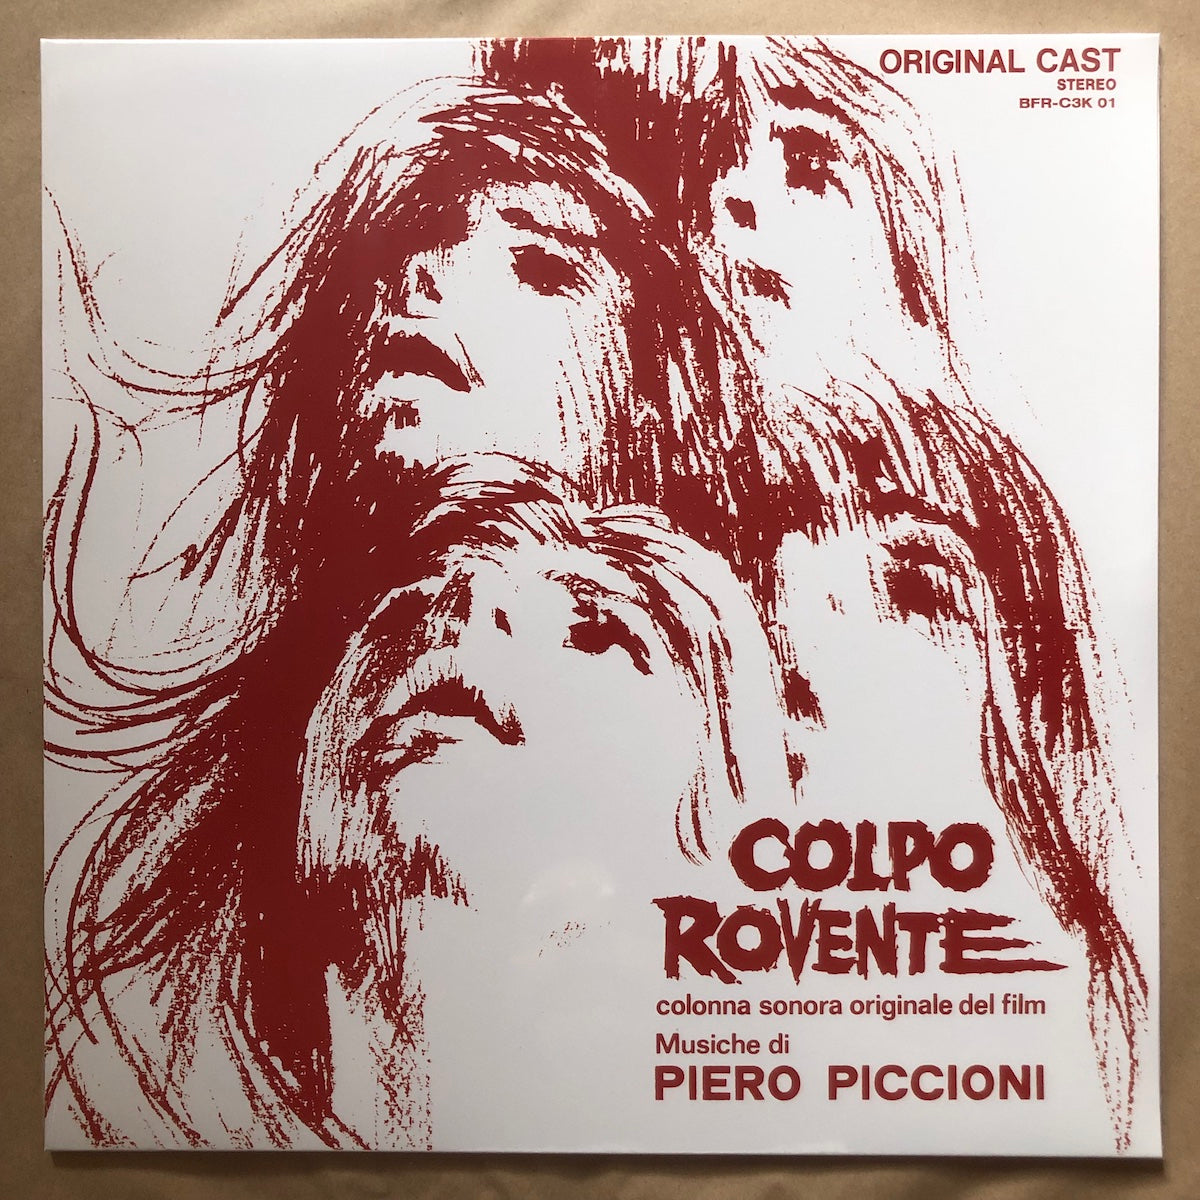 Colpo Rovente: Vinyl LP